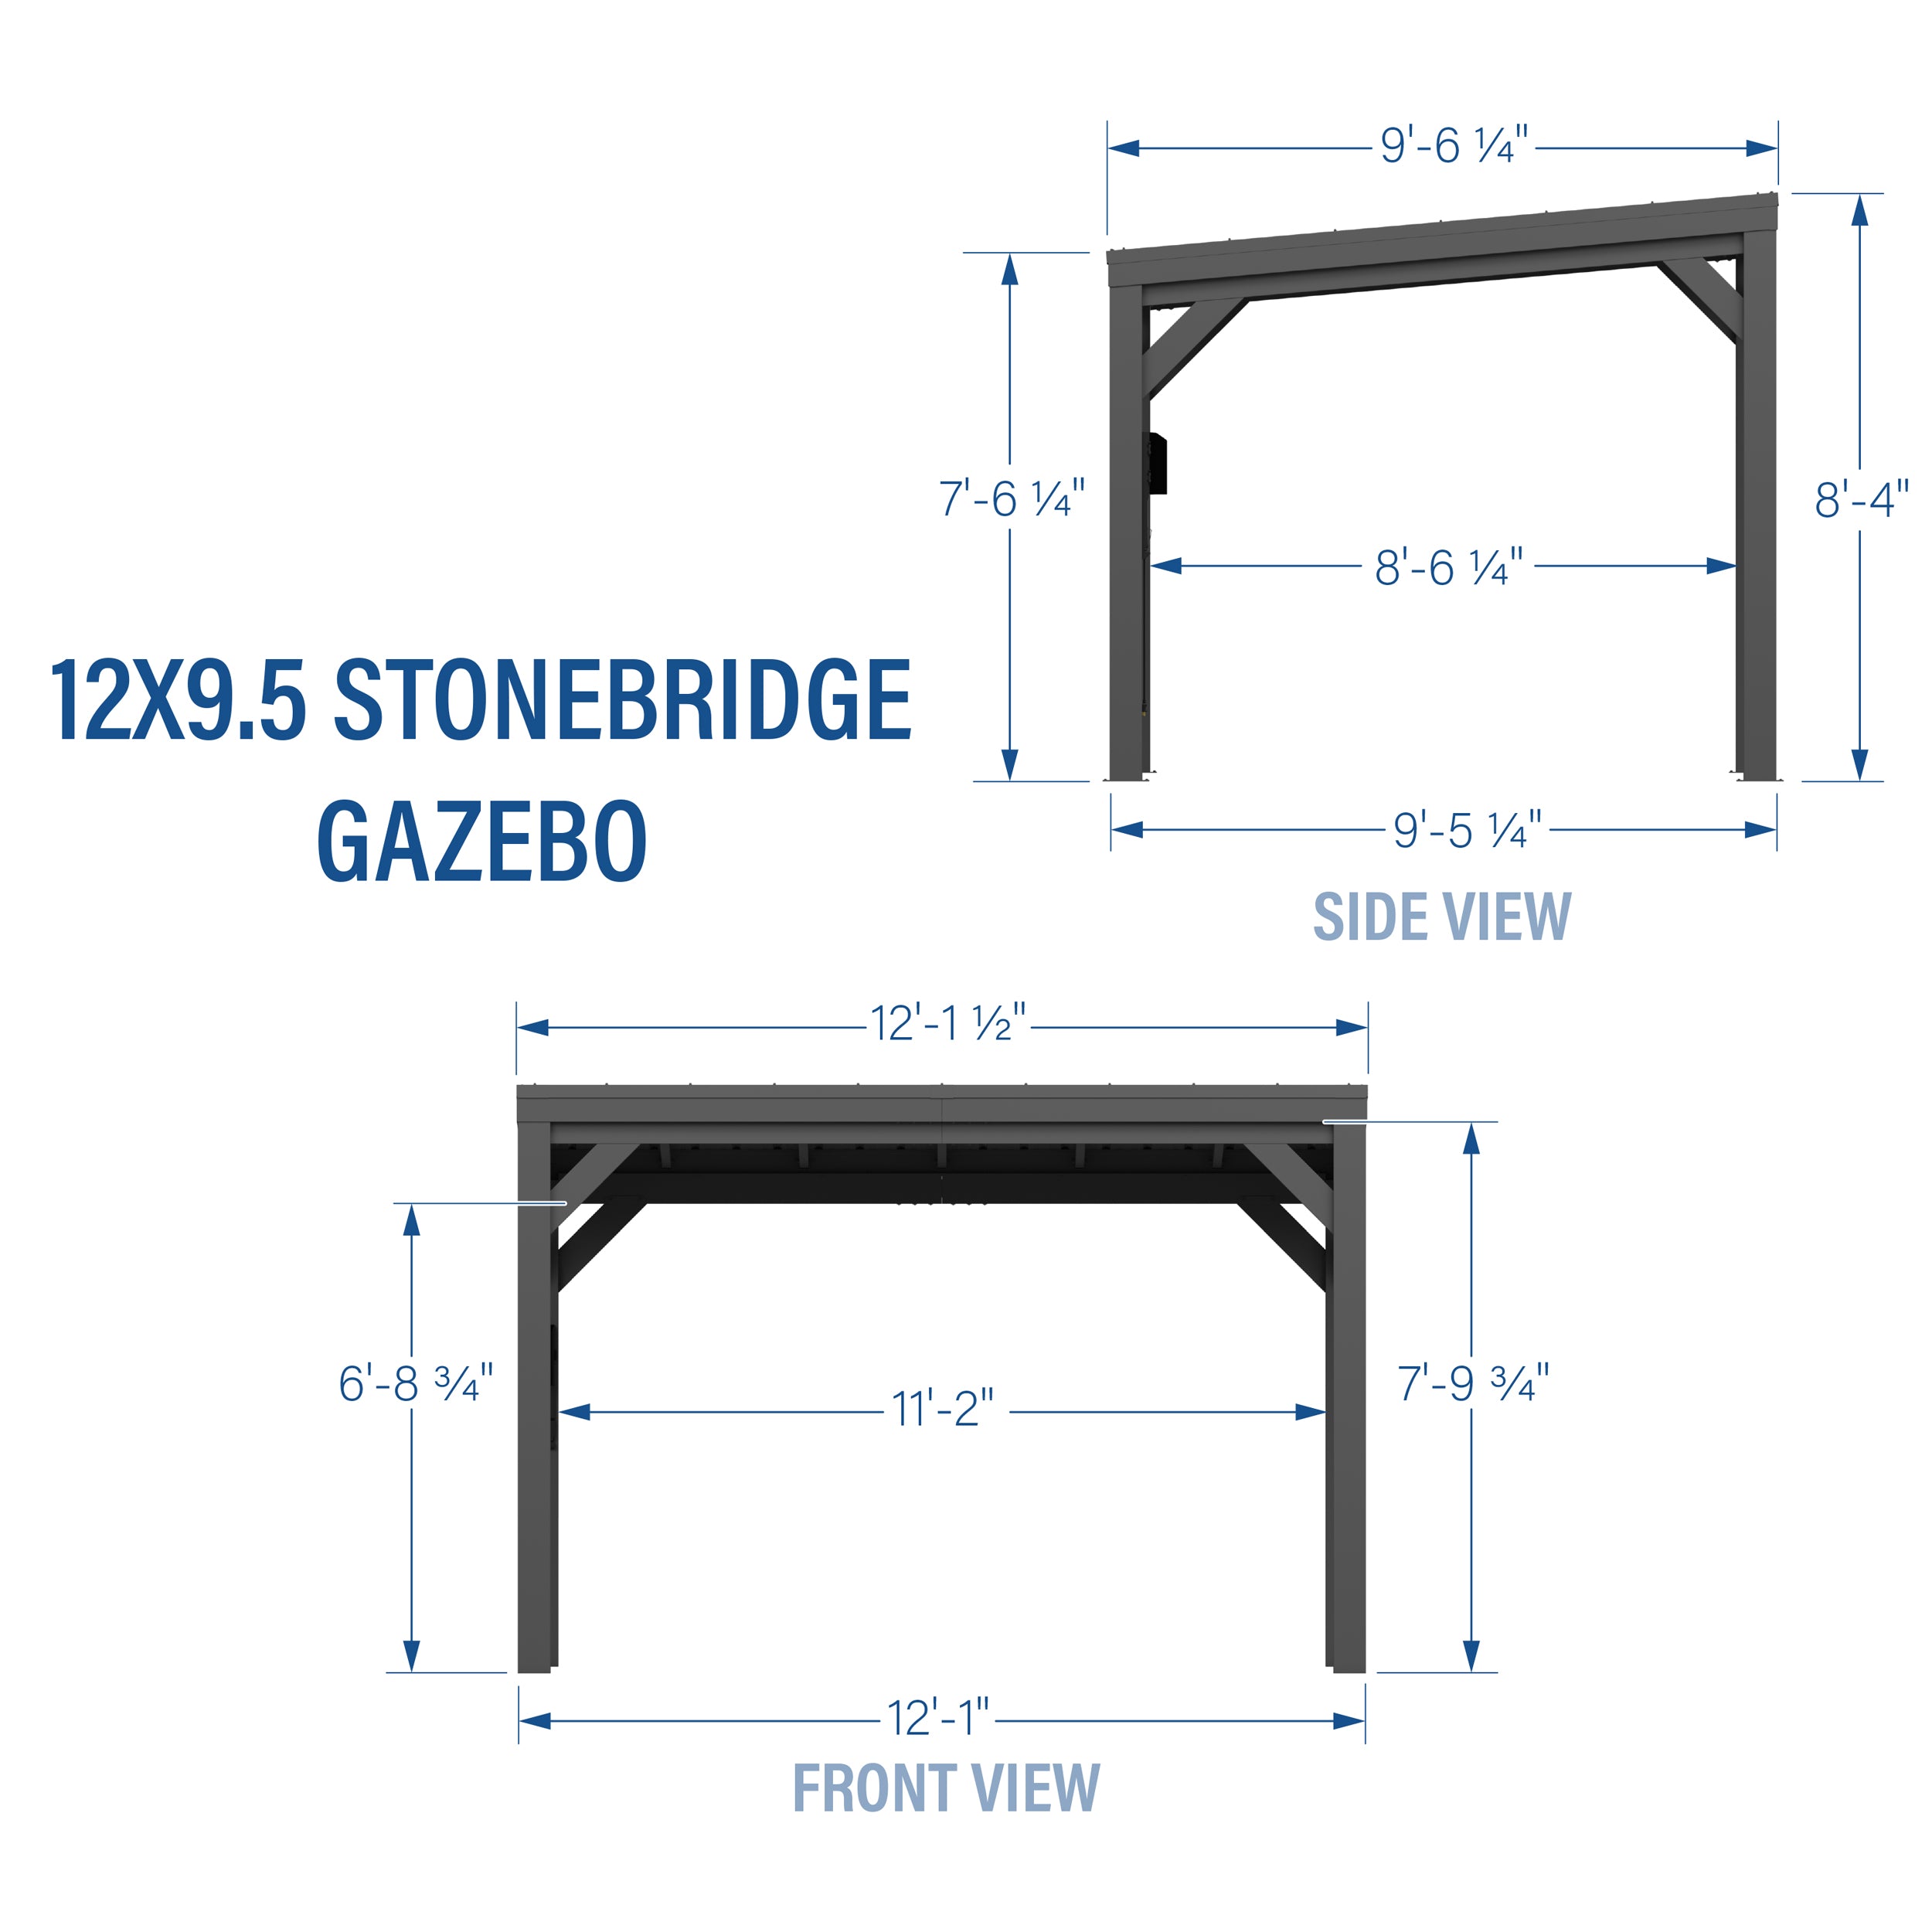 12x9.5 Stonebridge Gazebo